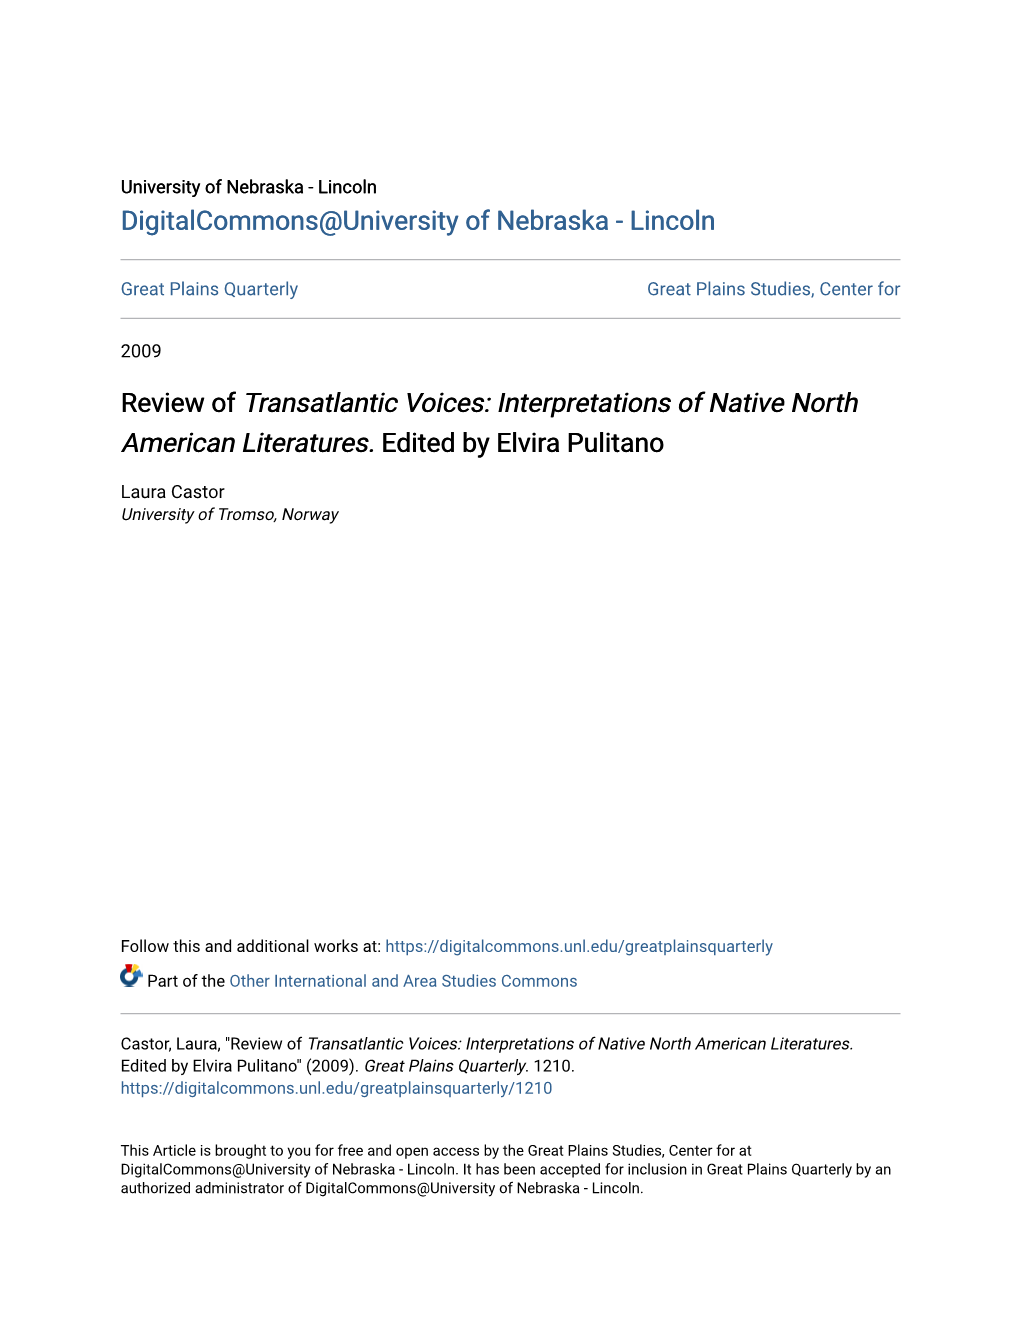 Review of Transatlantic Voices: Interpretations of Native North American Literatures